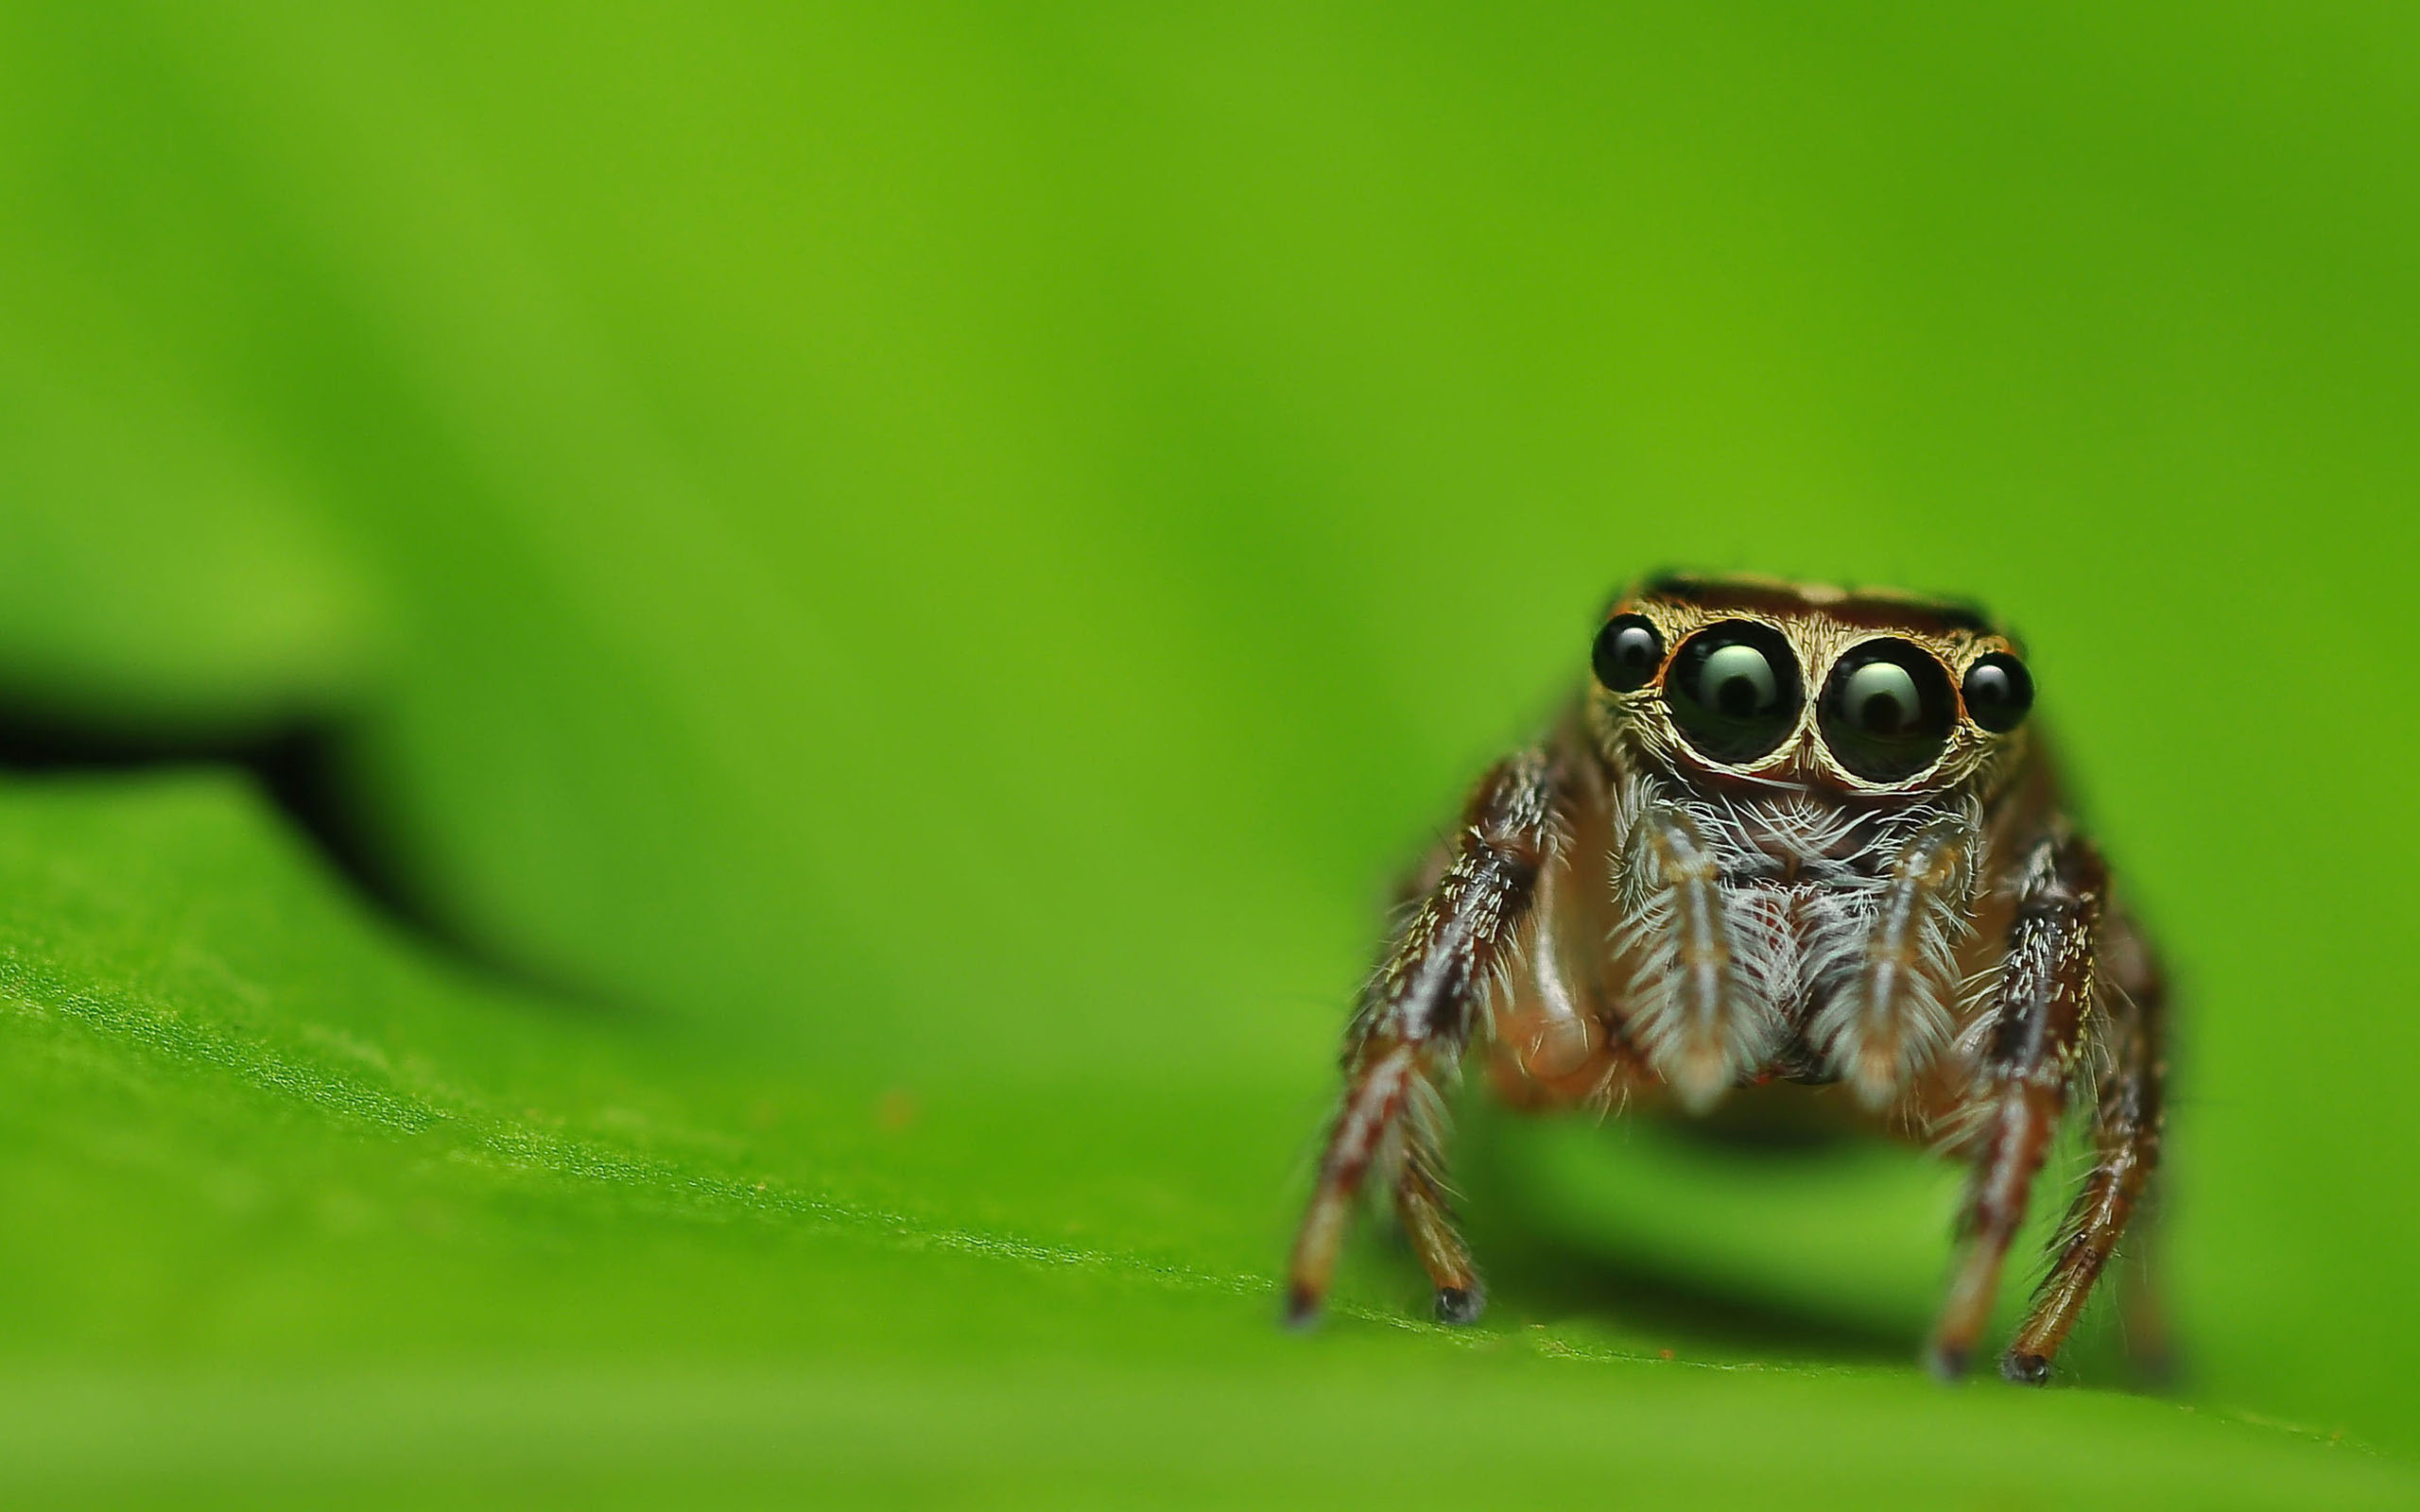 Eight-legged creature, Arachnid species, Creepy crawlies, Spider wallpaper, 2560x1600 HD Desktop